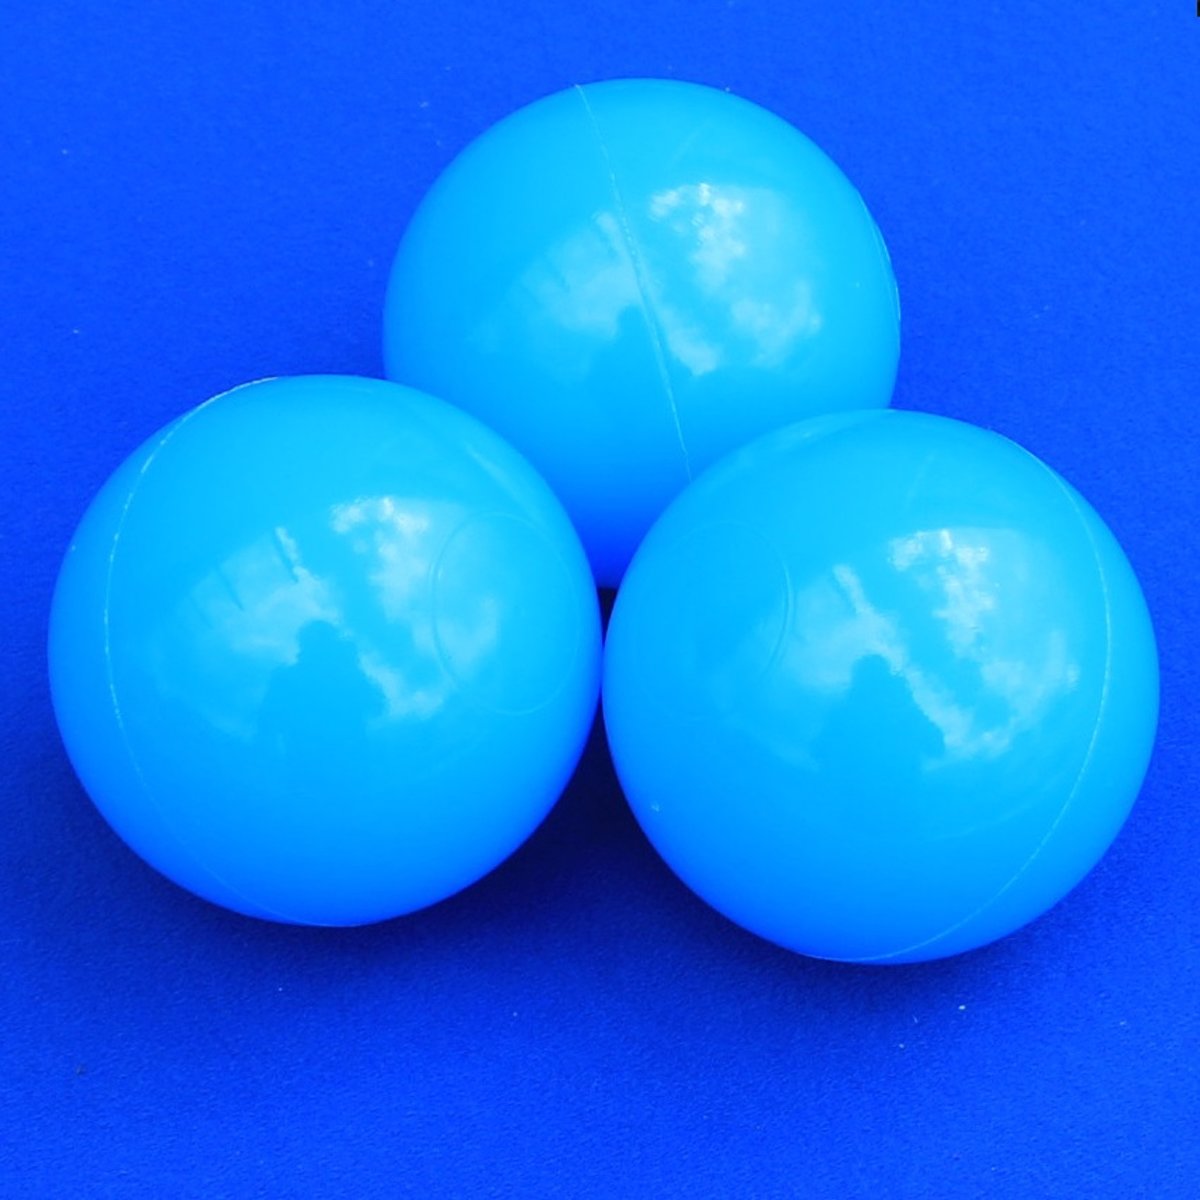 Ballenbakballen 70mm Licht Blauw - 1000 stuks